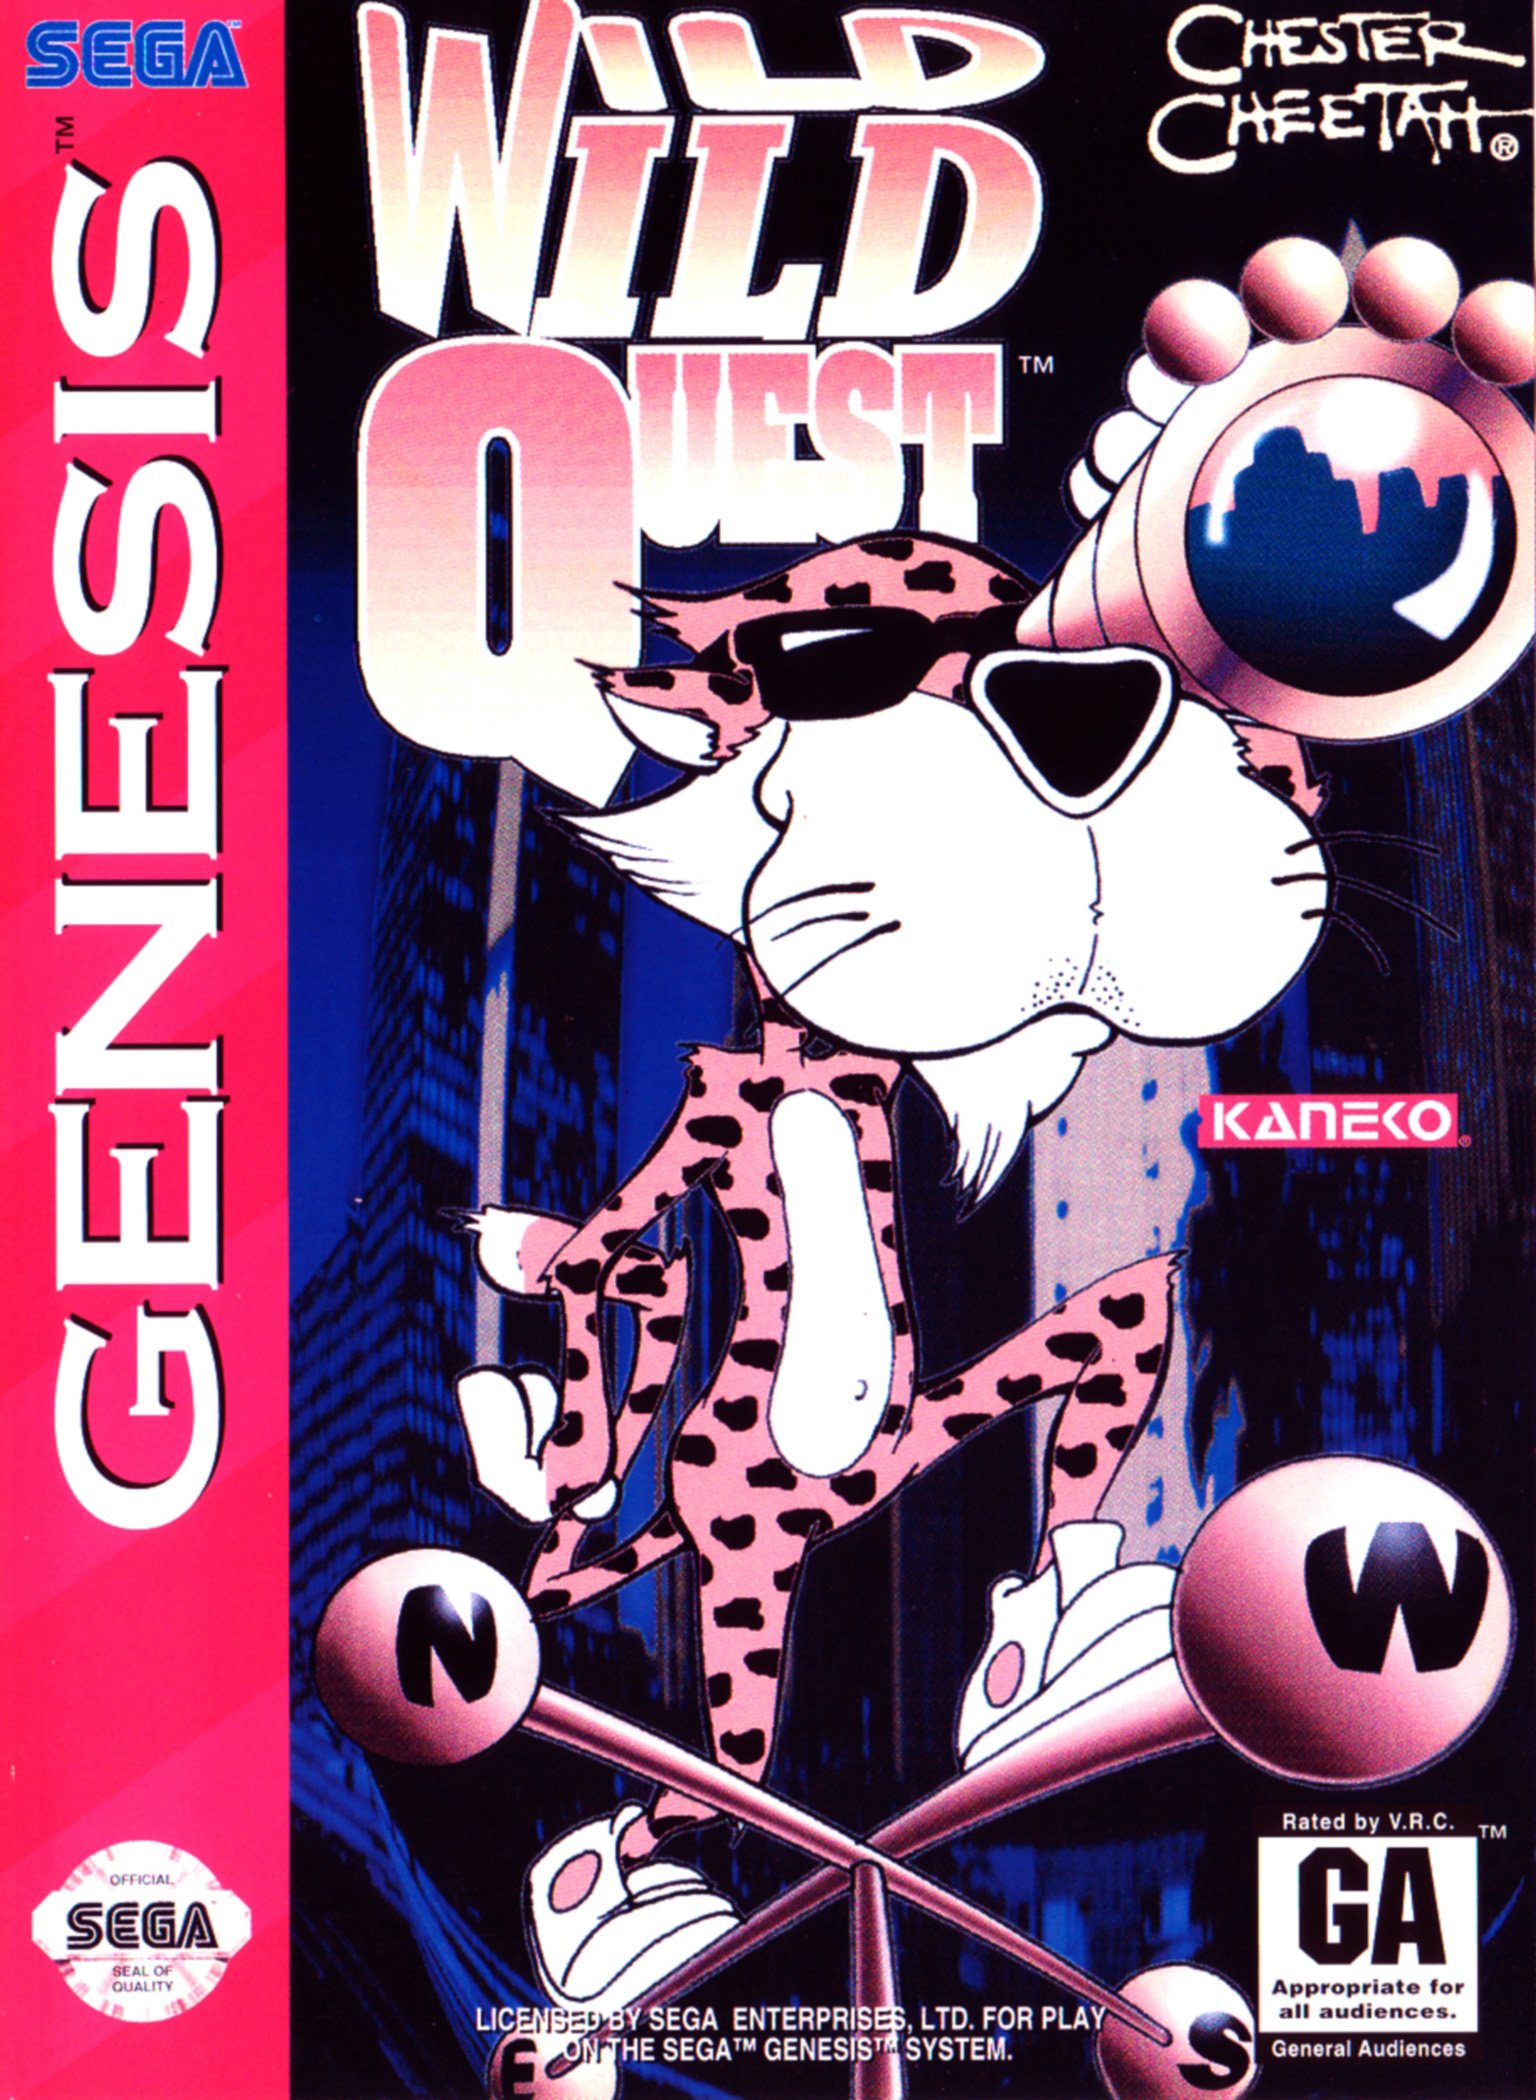 Chester Cheetah: Wild Wild Quest Picture